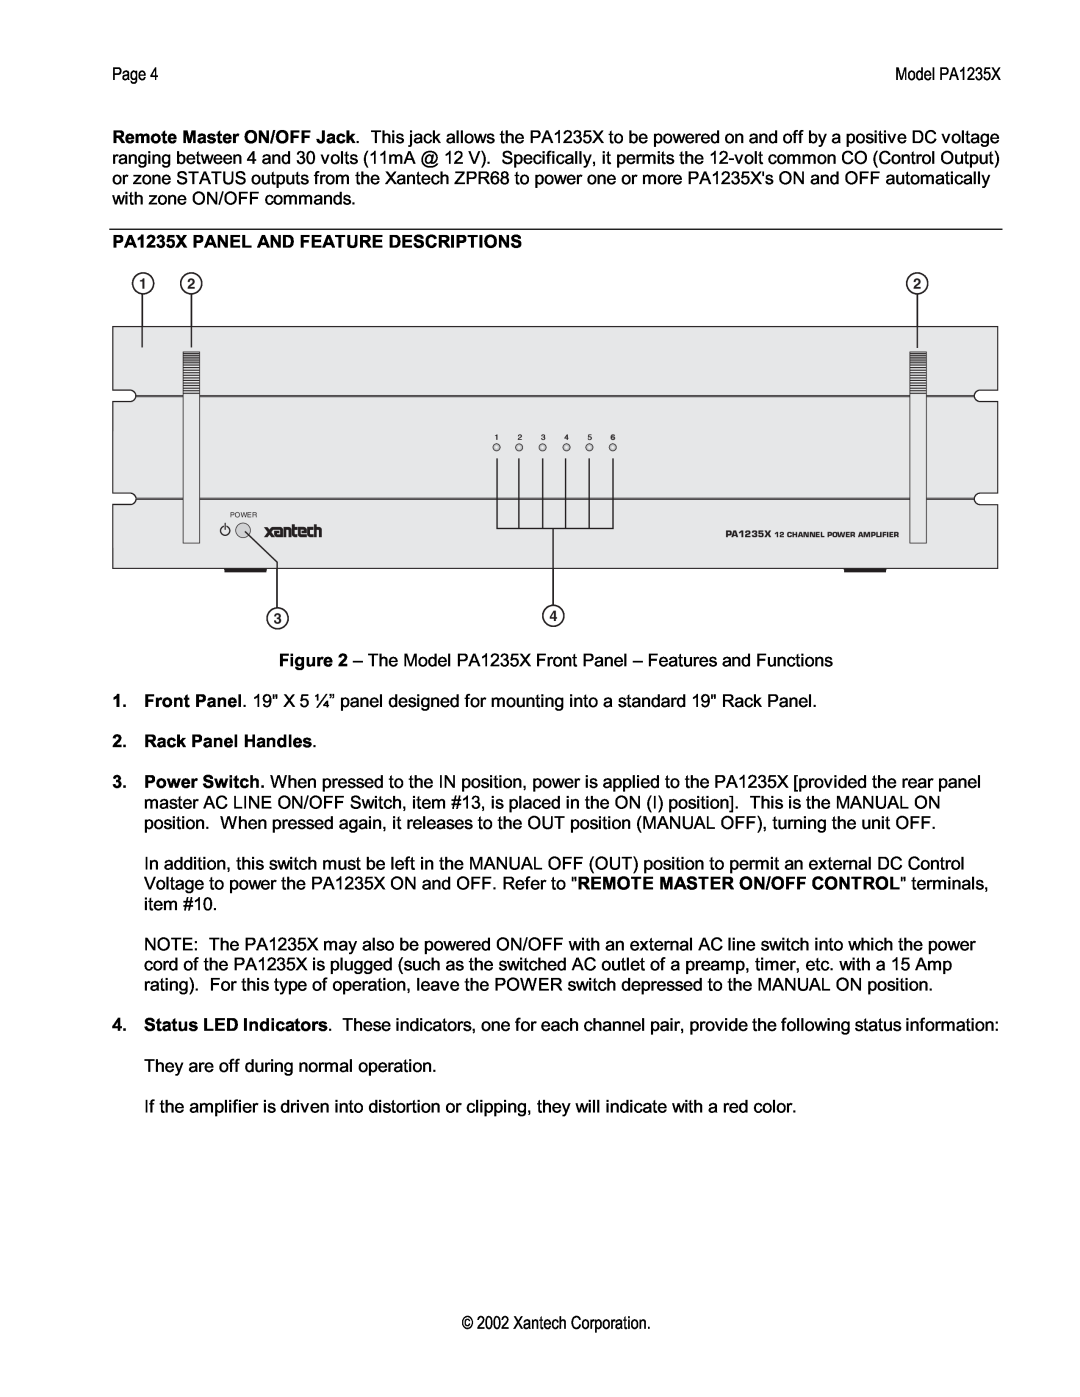 Xantech installation instructions PA1235X PANEL AND FEATURE DESCRIPTIONS, Rack Panel Handles 